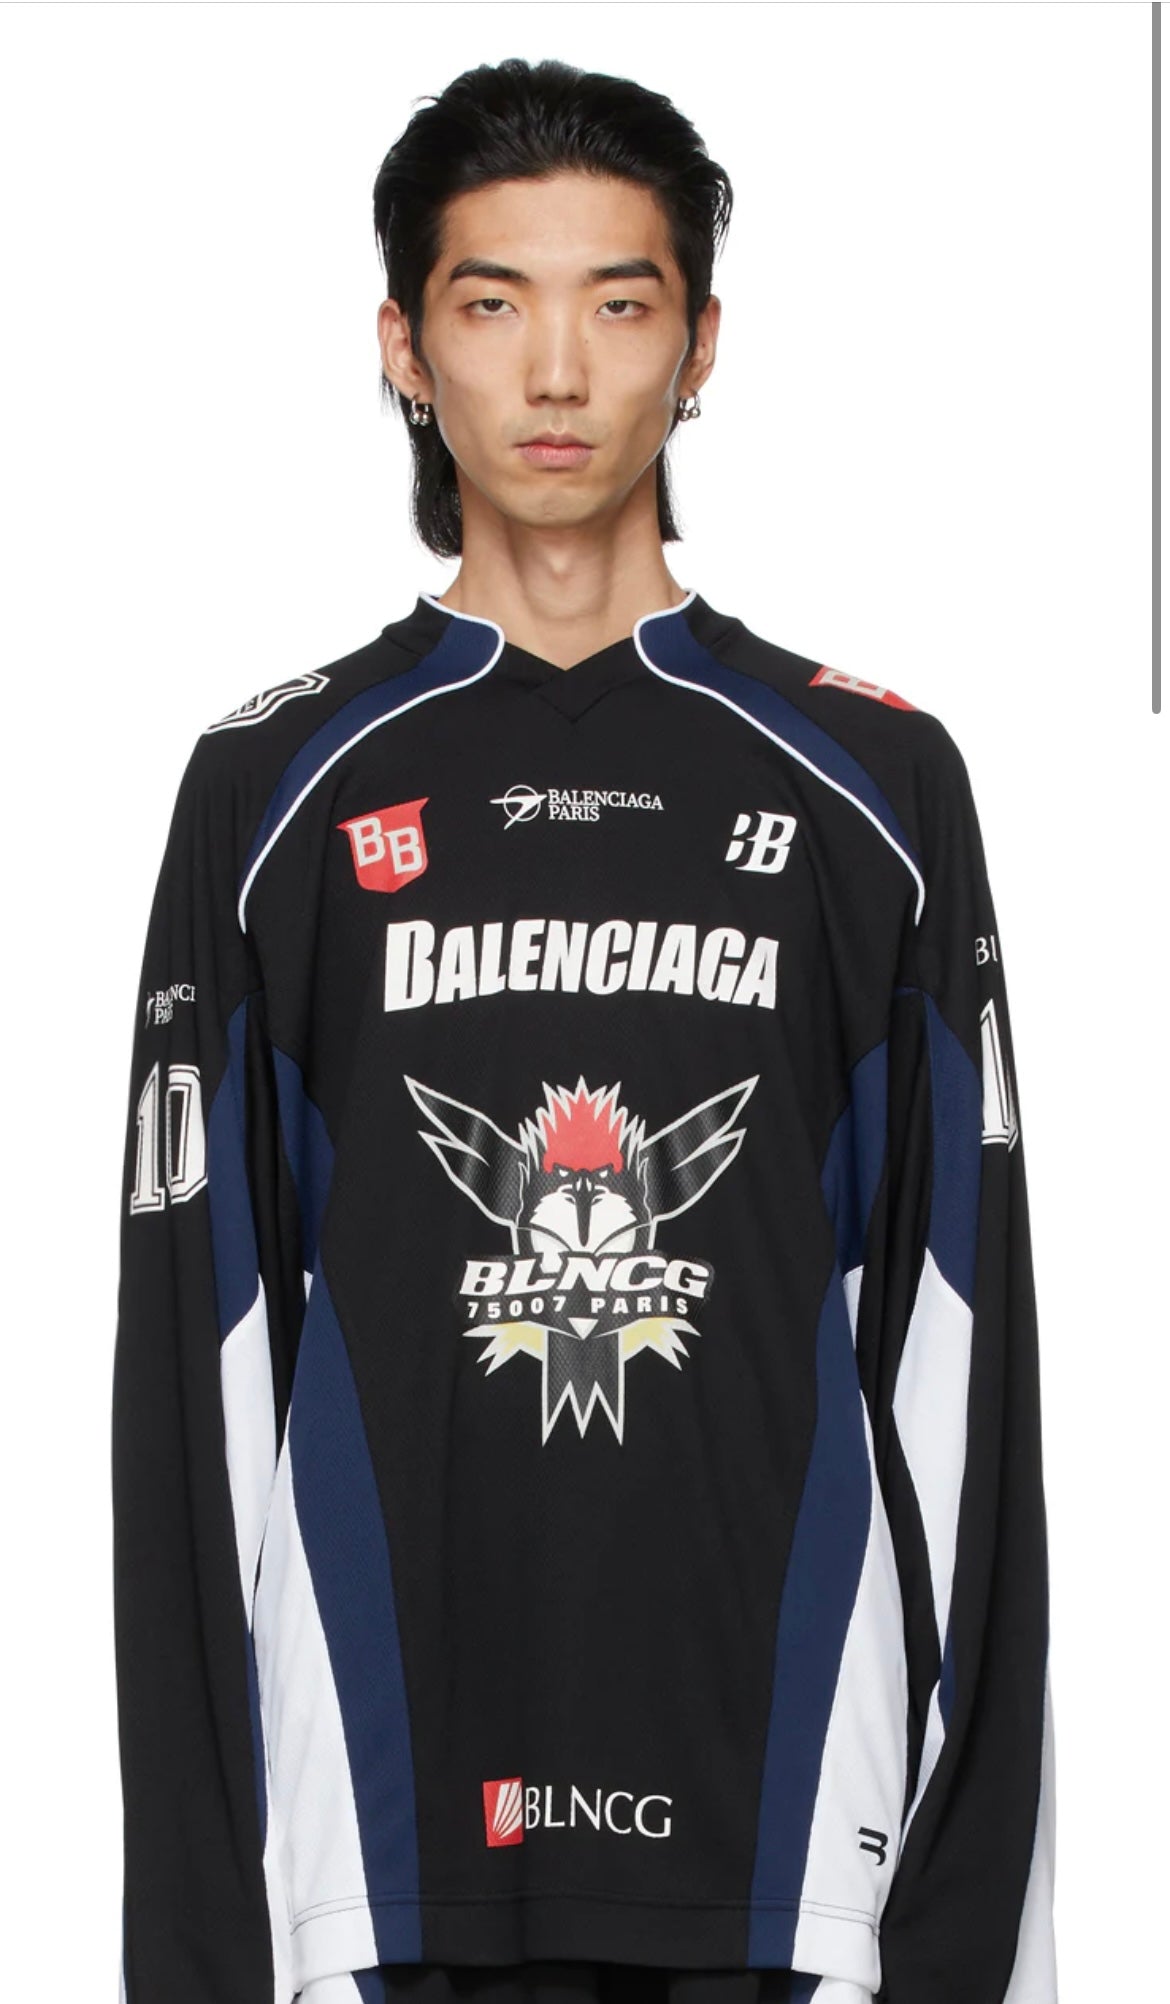 2020’ Balenciaga Hockey Racing Logo Jersey